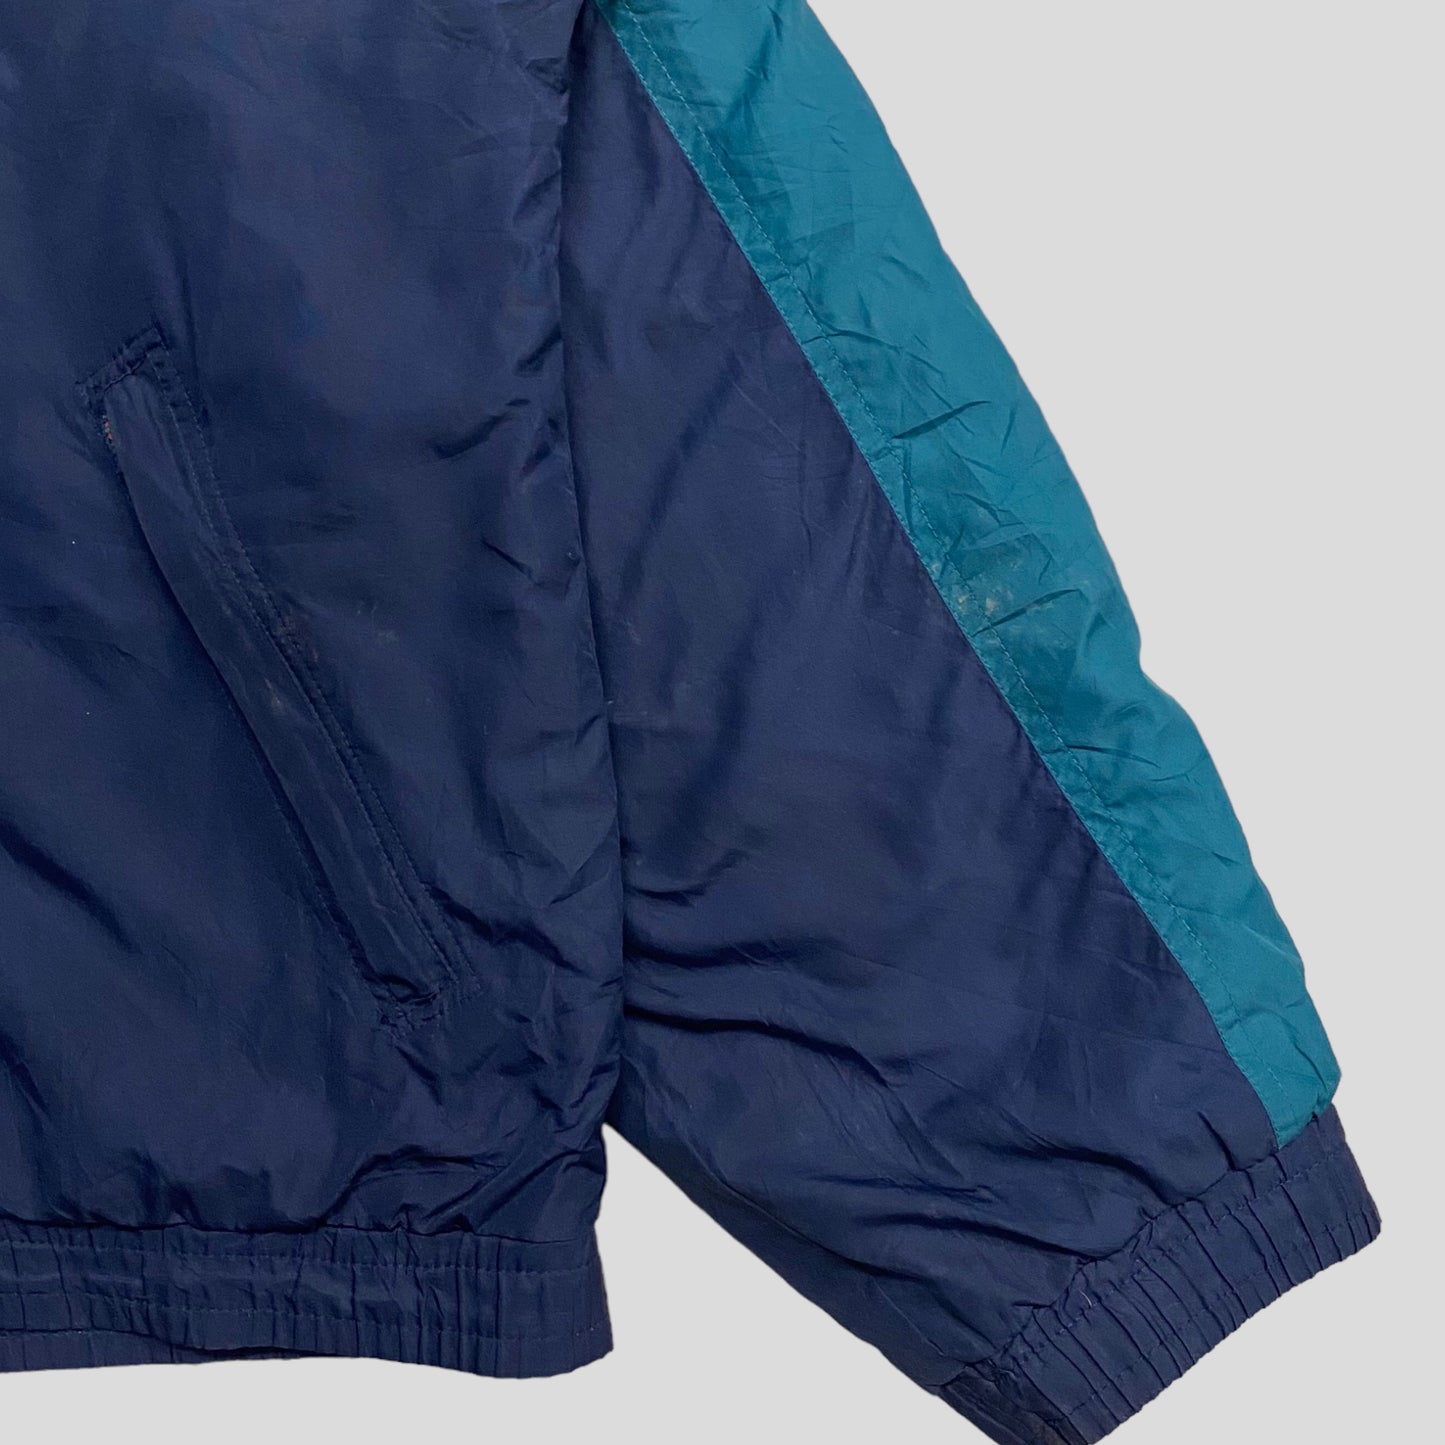 90's UMBRO nylon jacket